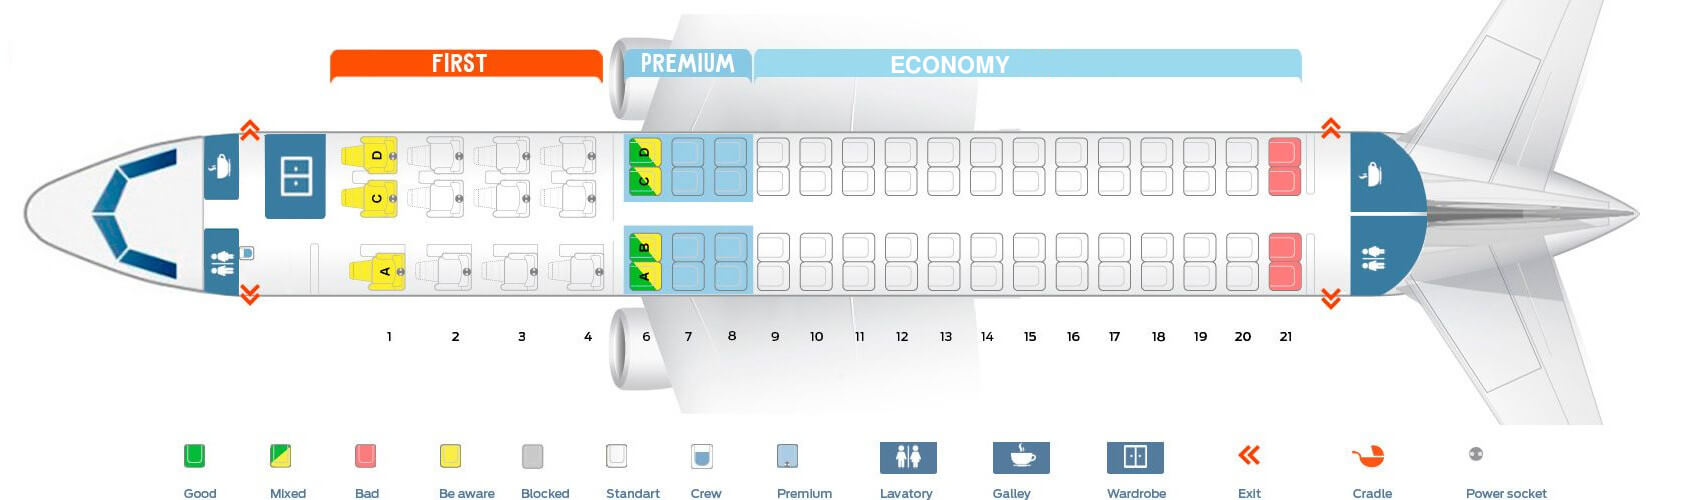 United Embraer Erj 175 Seating Chart Awesome Home